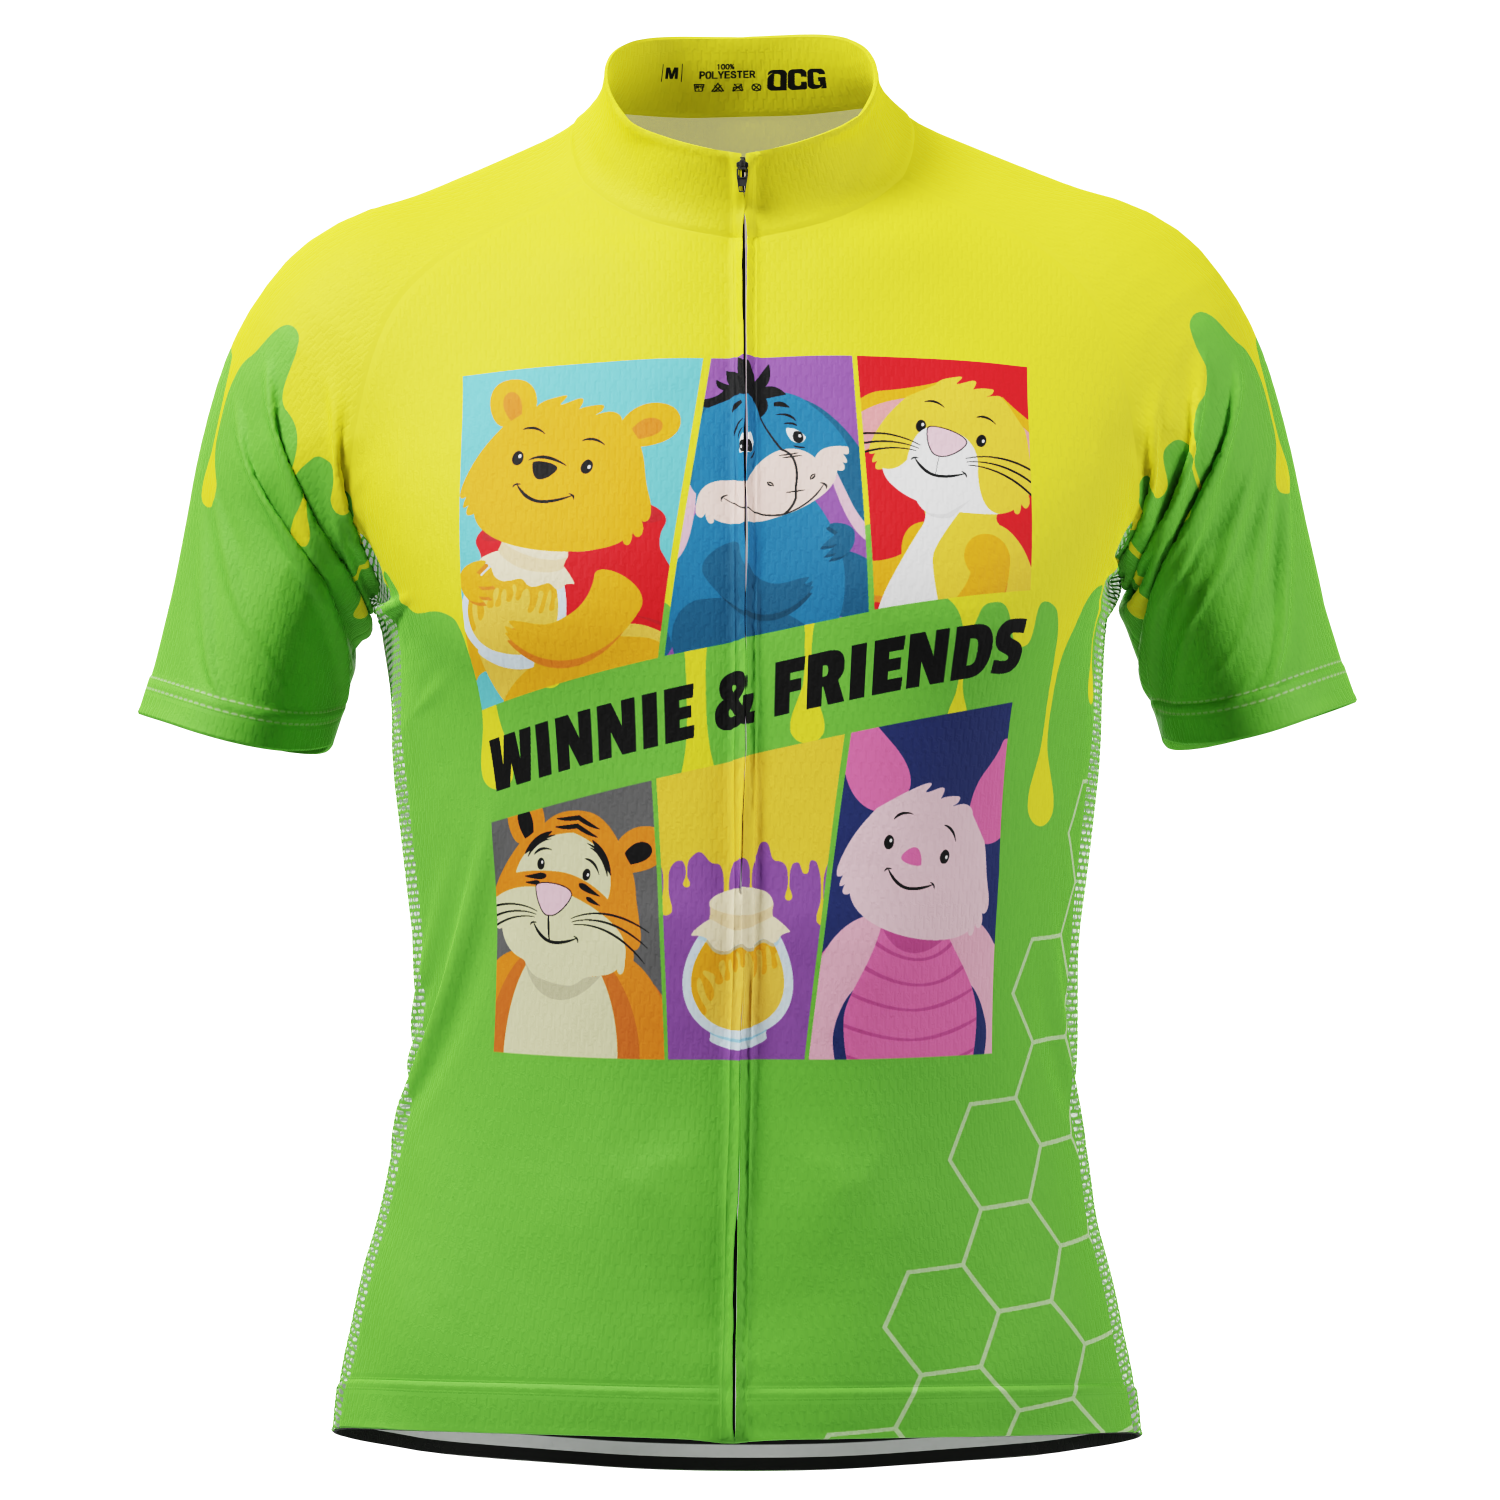 Men's Winnie & Friends Short Sleeve Cycling Jersey